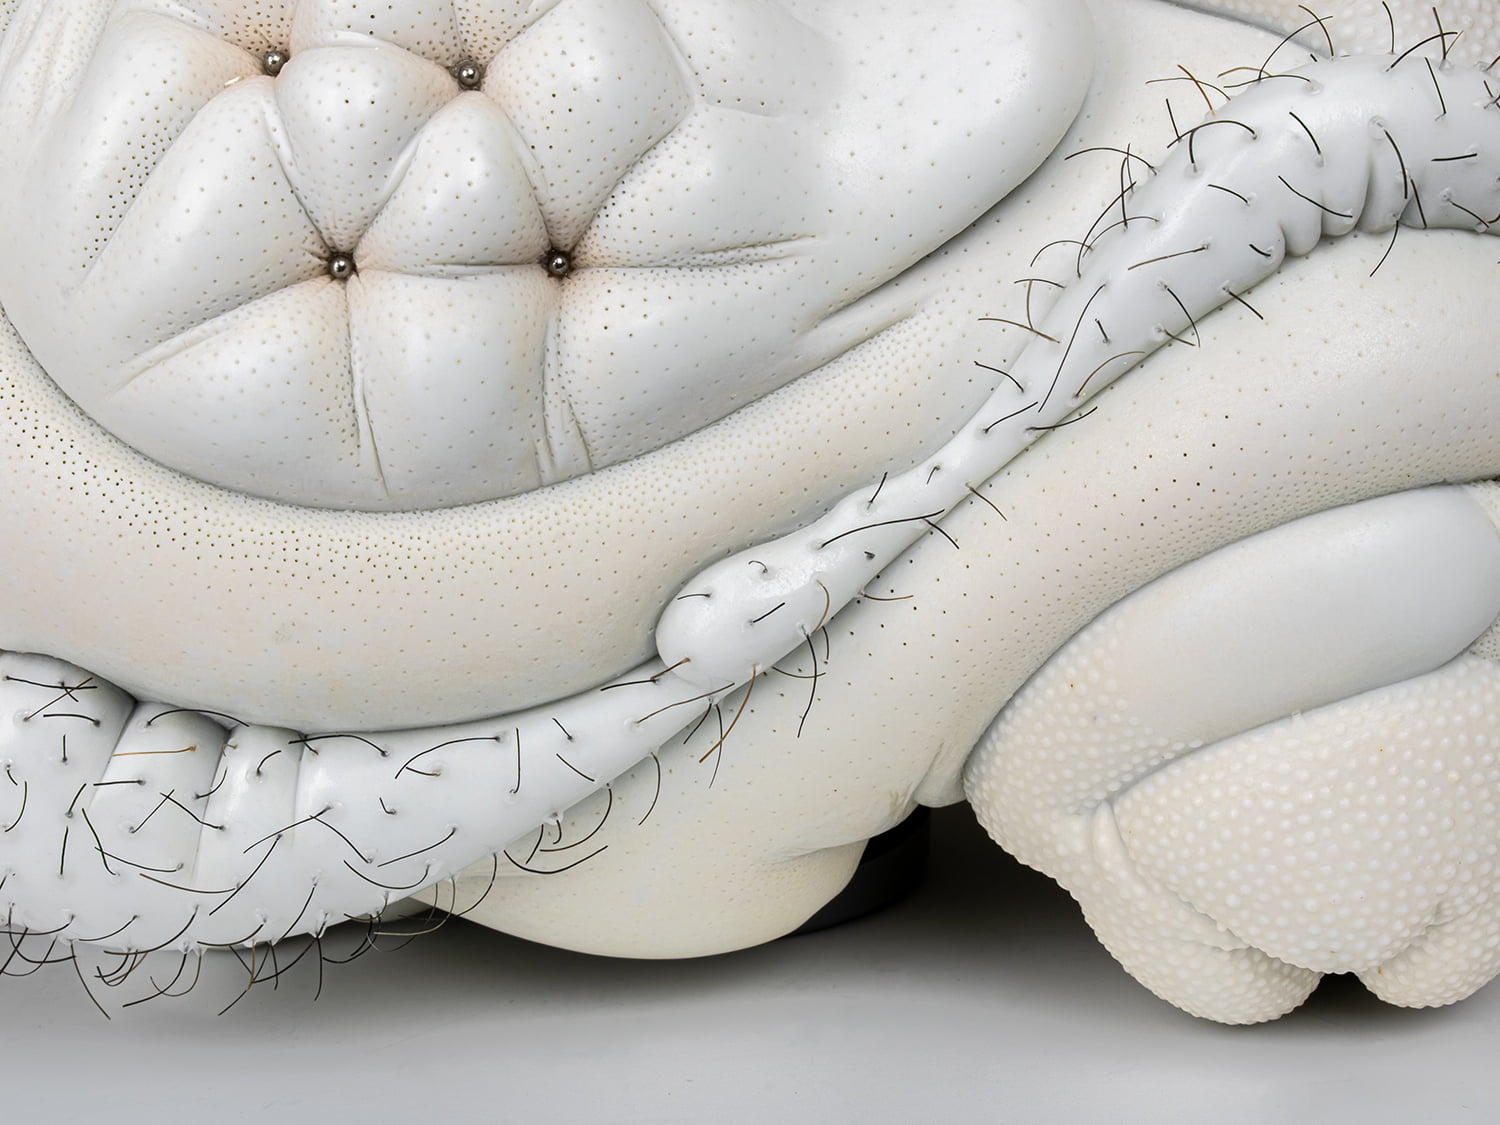 Jason Briggs "Ventura" (detail 4). porcelain and mixed media sculpture ceramics.